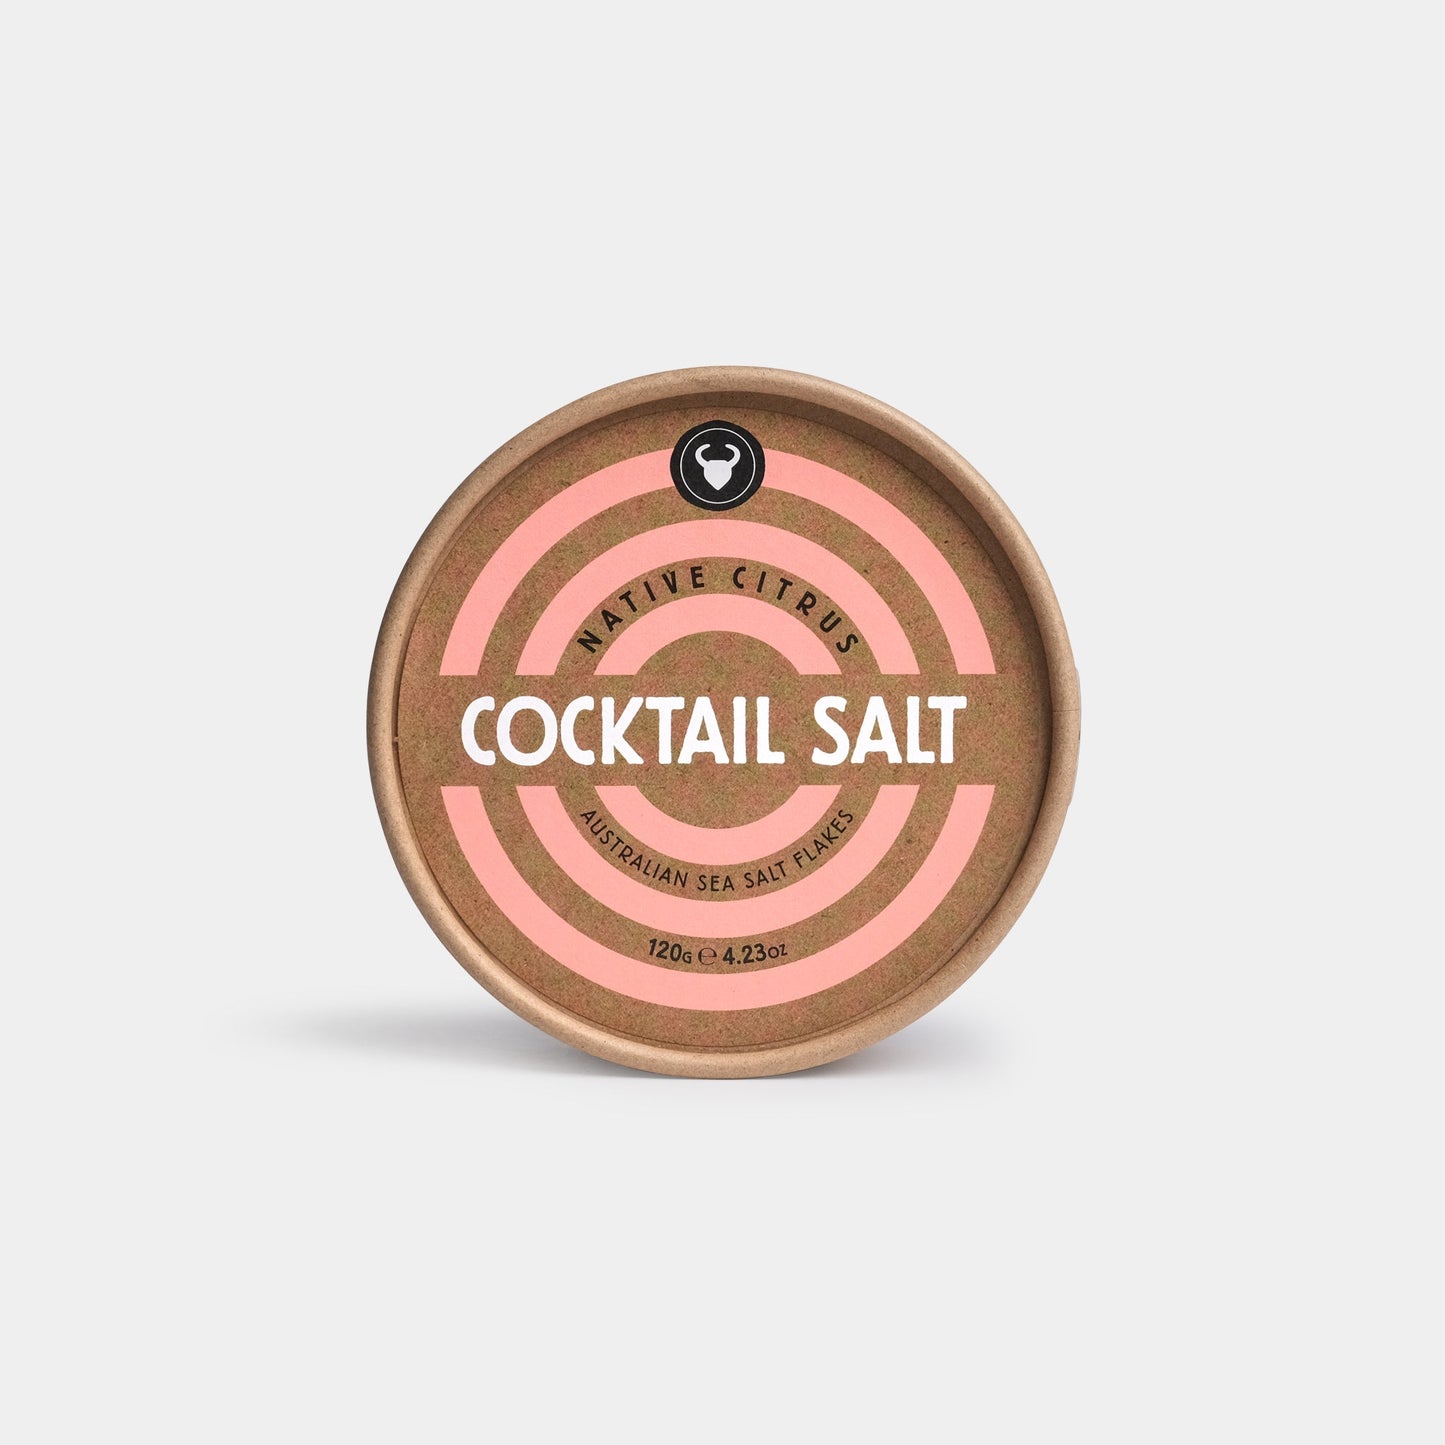 Small Batch Providore - Native Citrus Cocktail Salt - front view